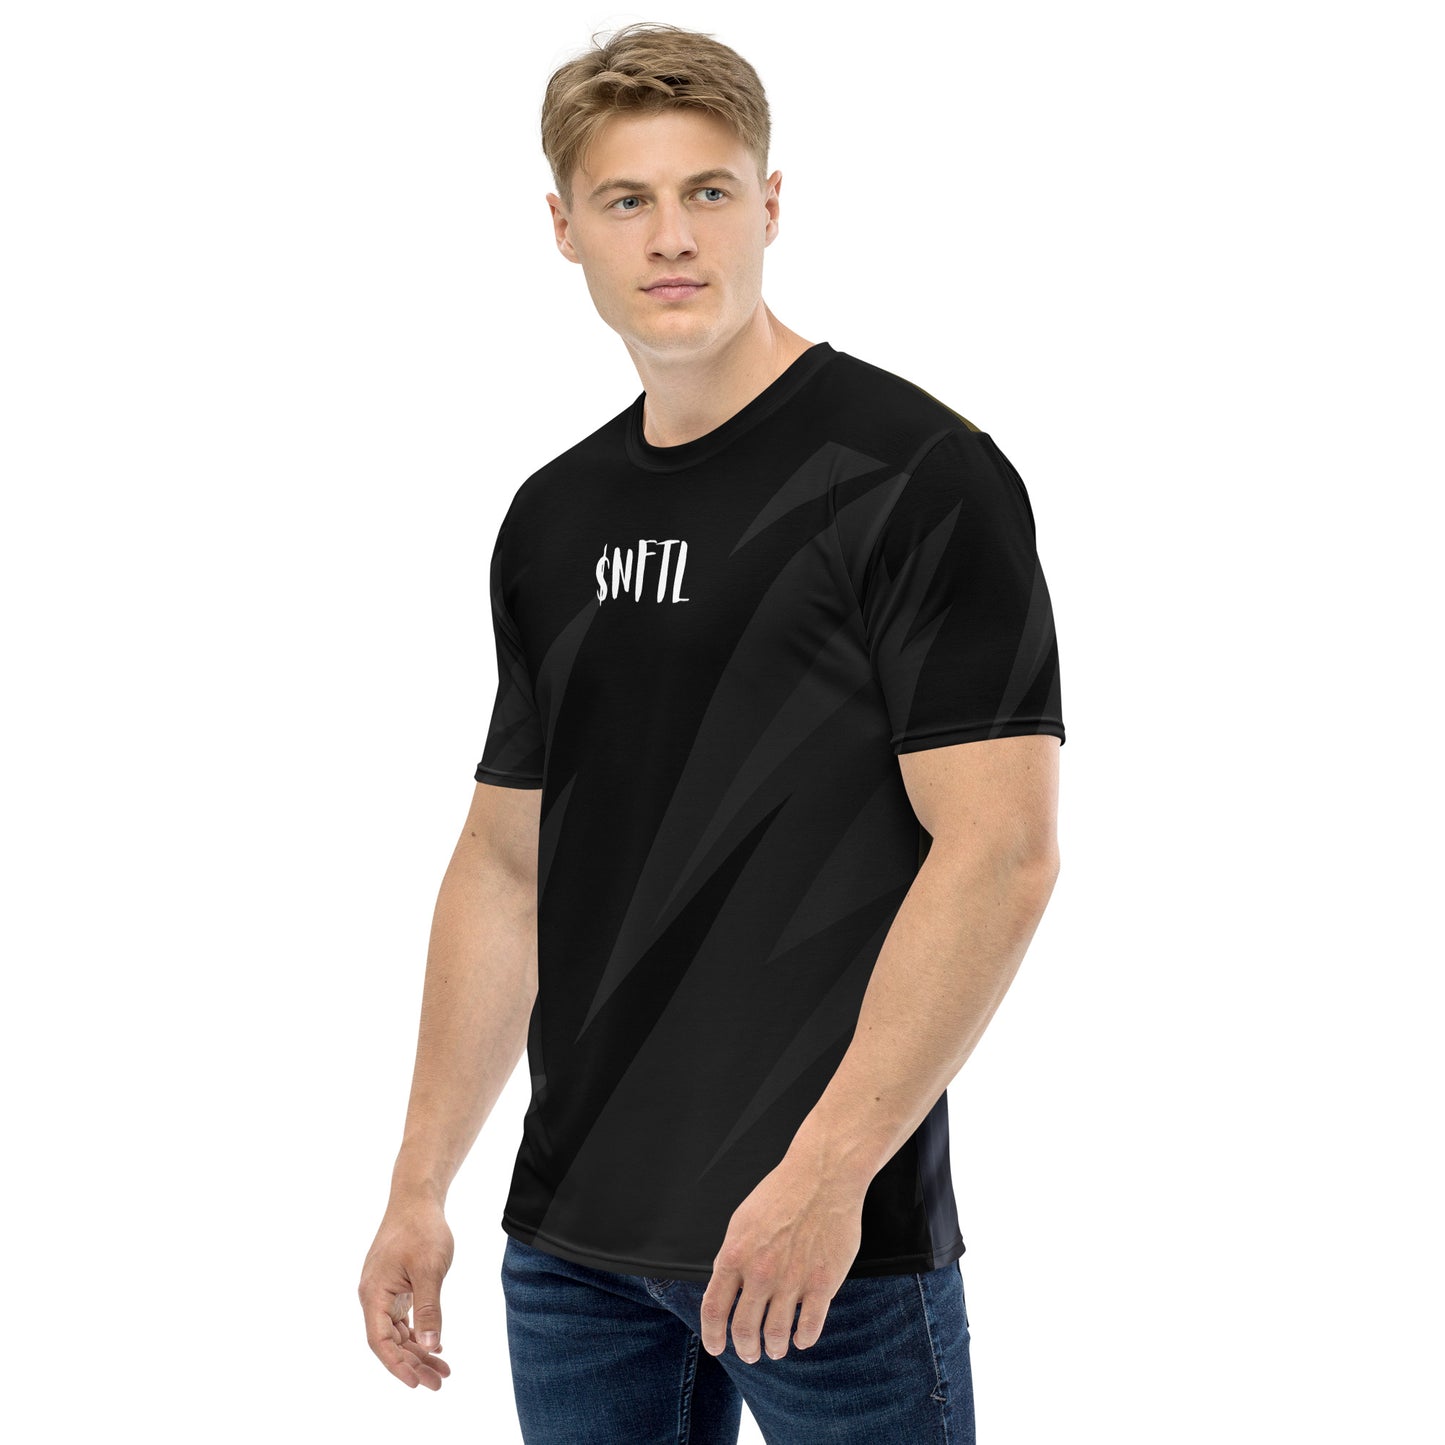 $NFTL Men's t-shirt Limited Edition #8